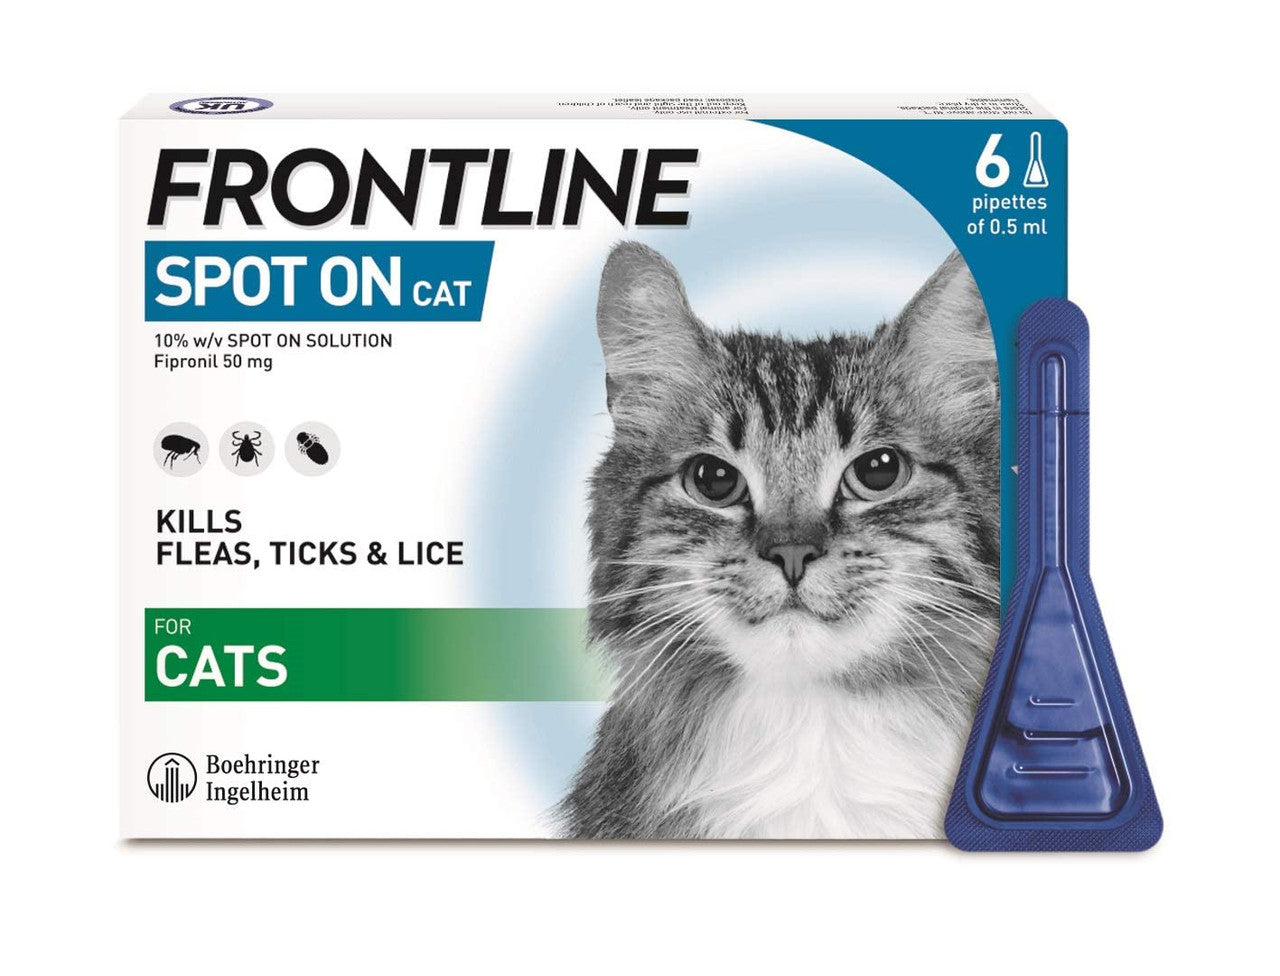 Frontline Flea & Tick Spot On - 6 pipettes - Cat Care Treatment